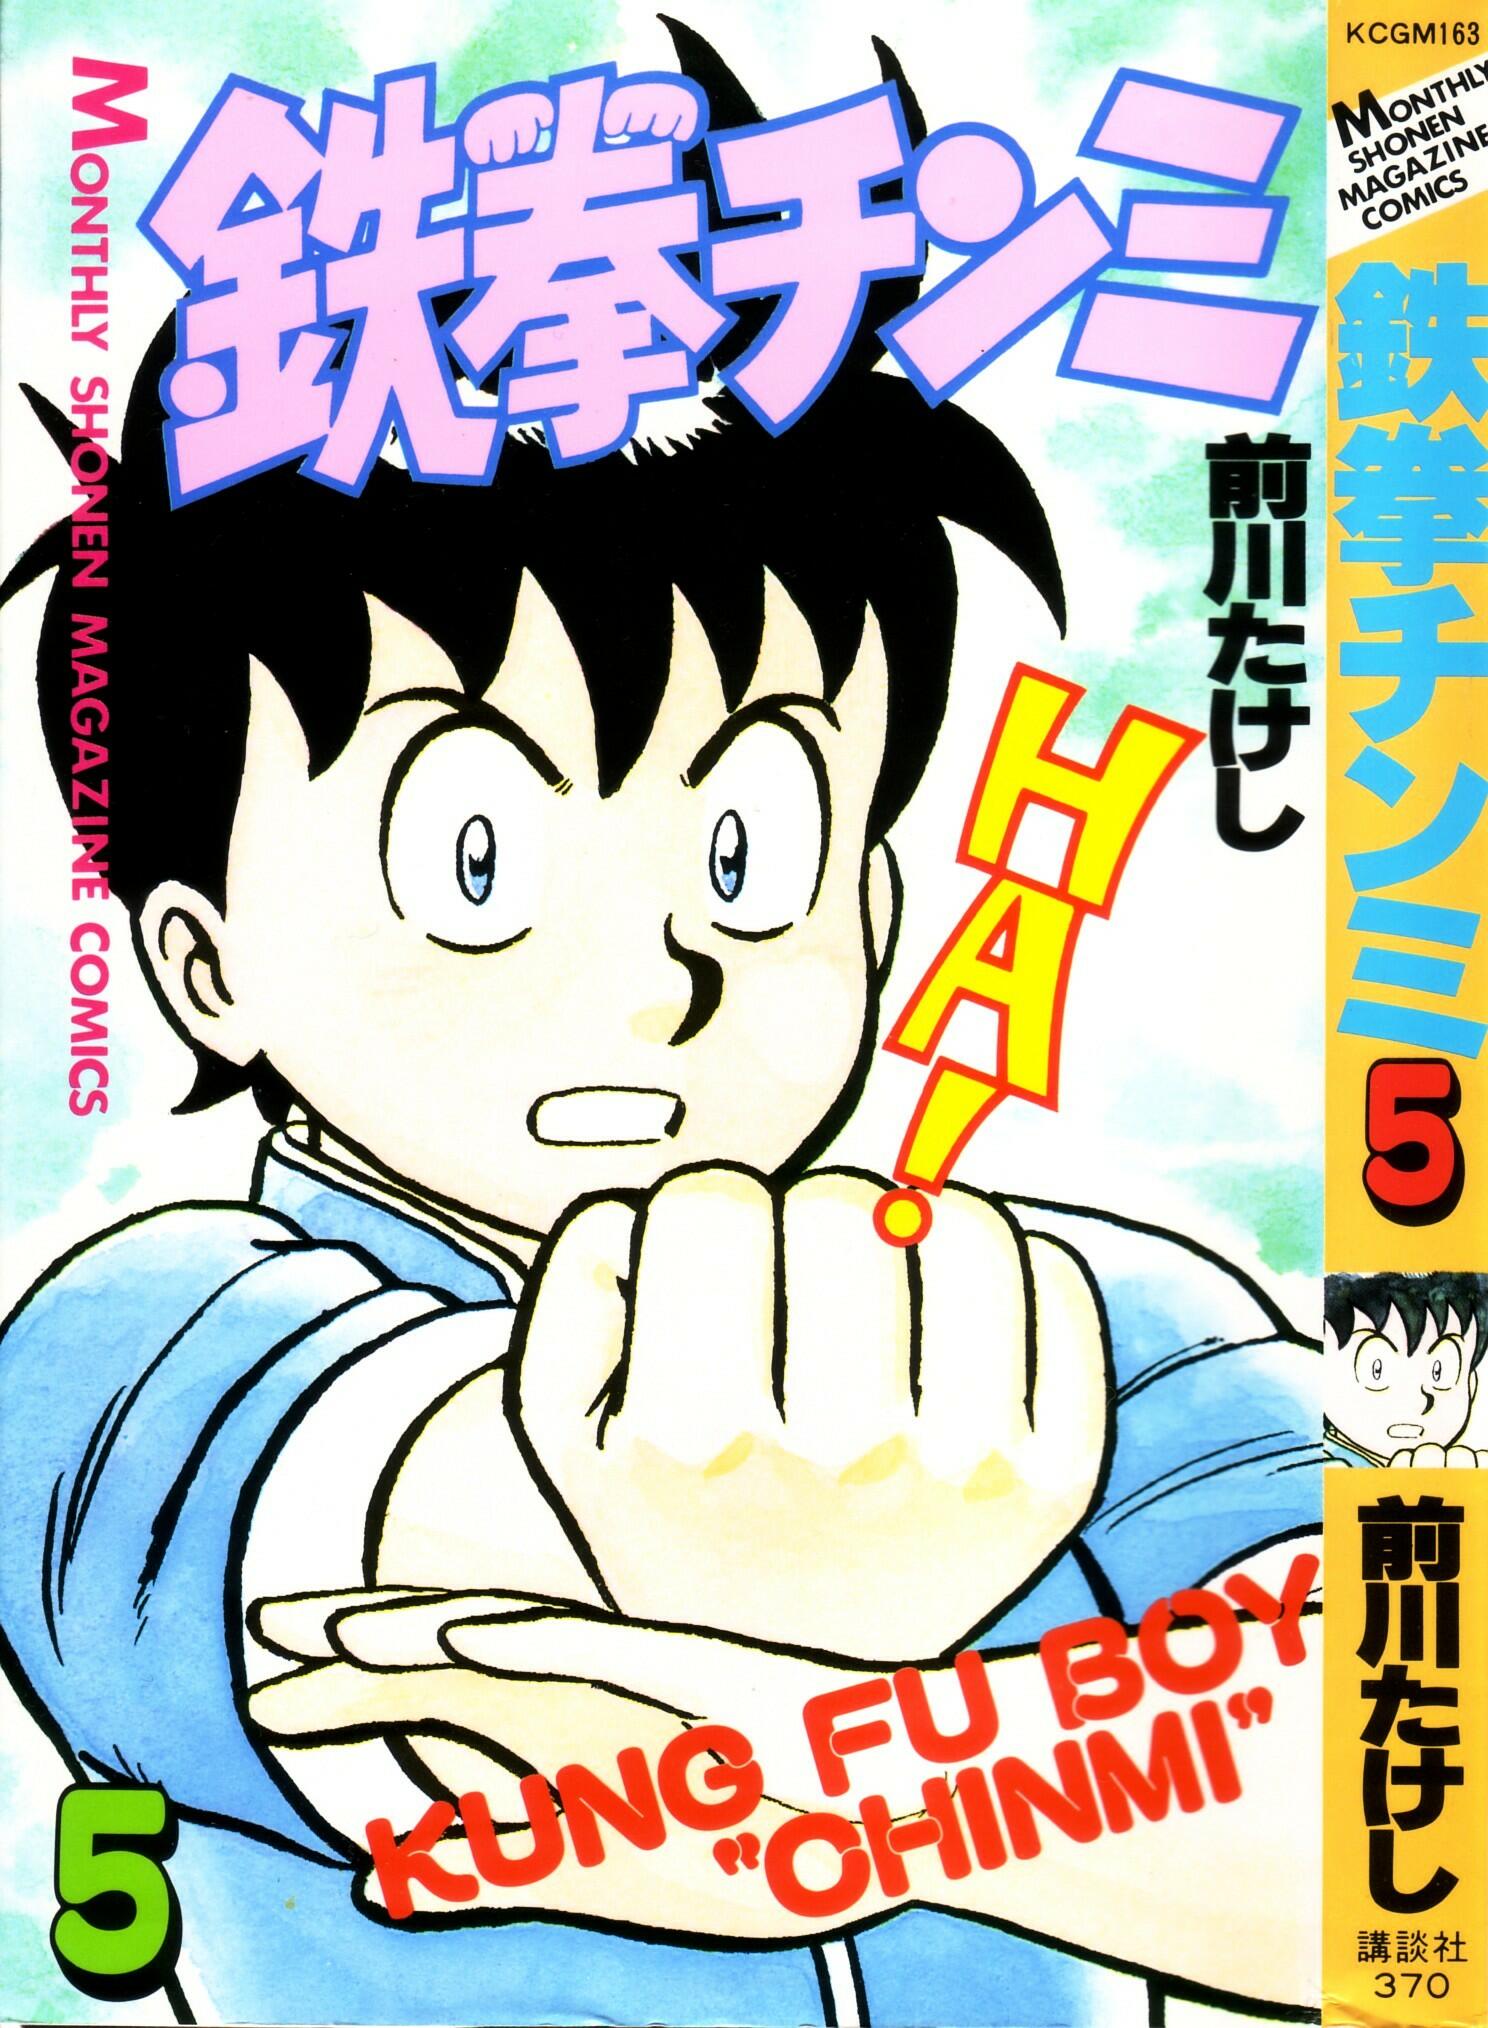 tekken chinmi manga online